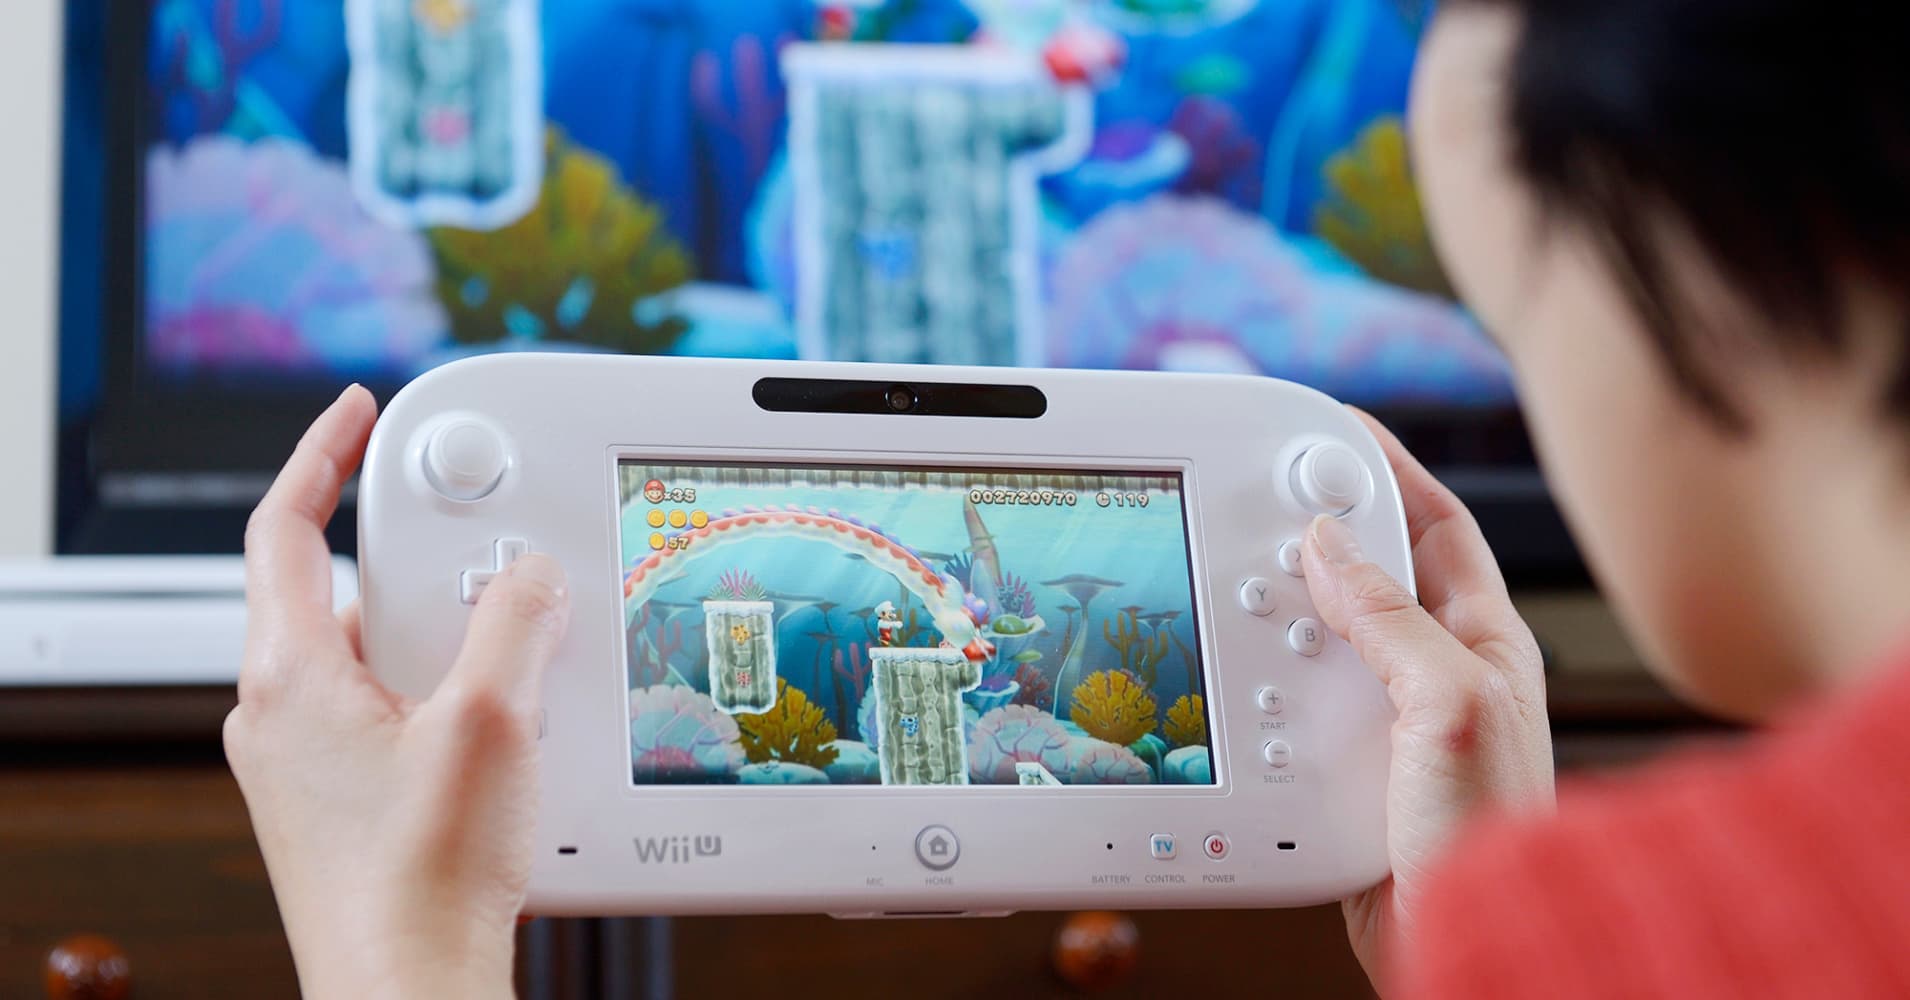 Nintendo releasing new handheld device, cheaper Wii U